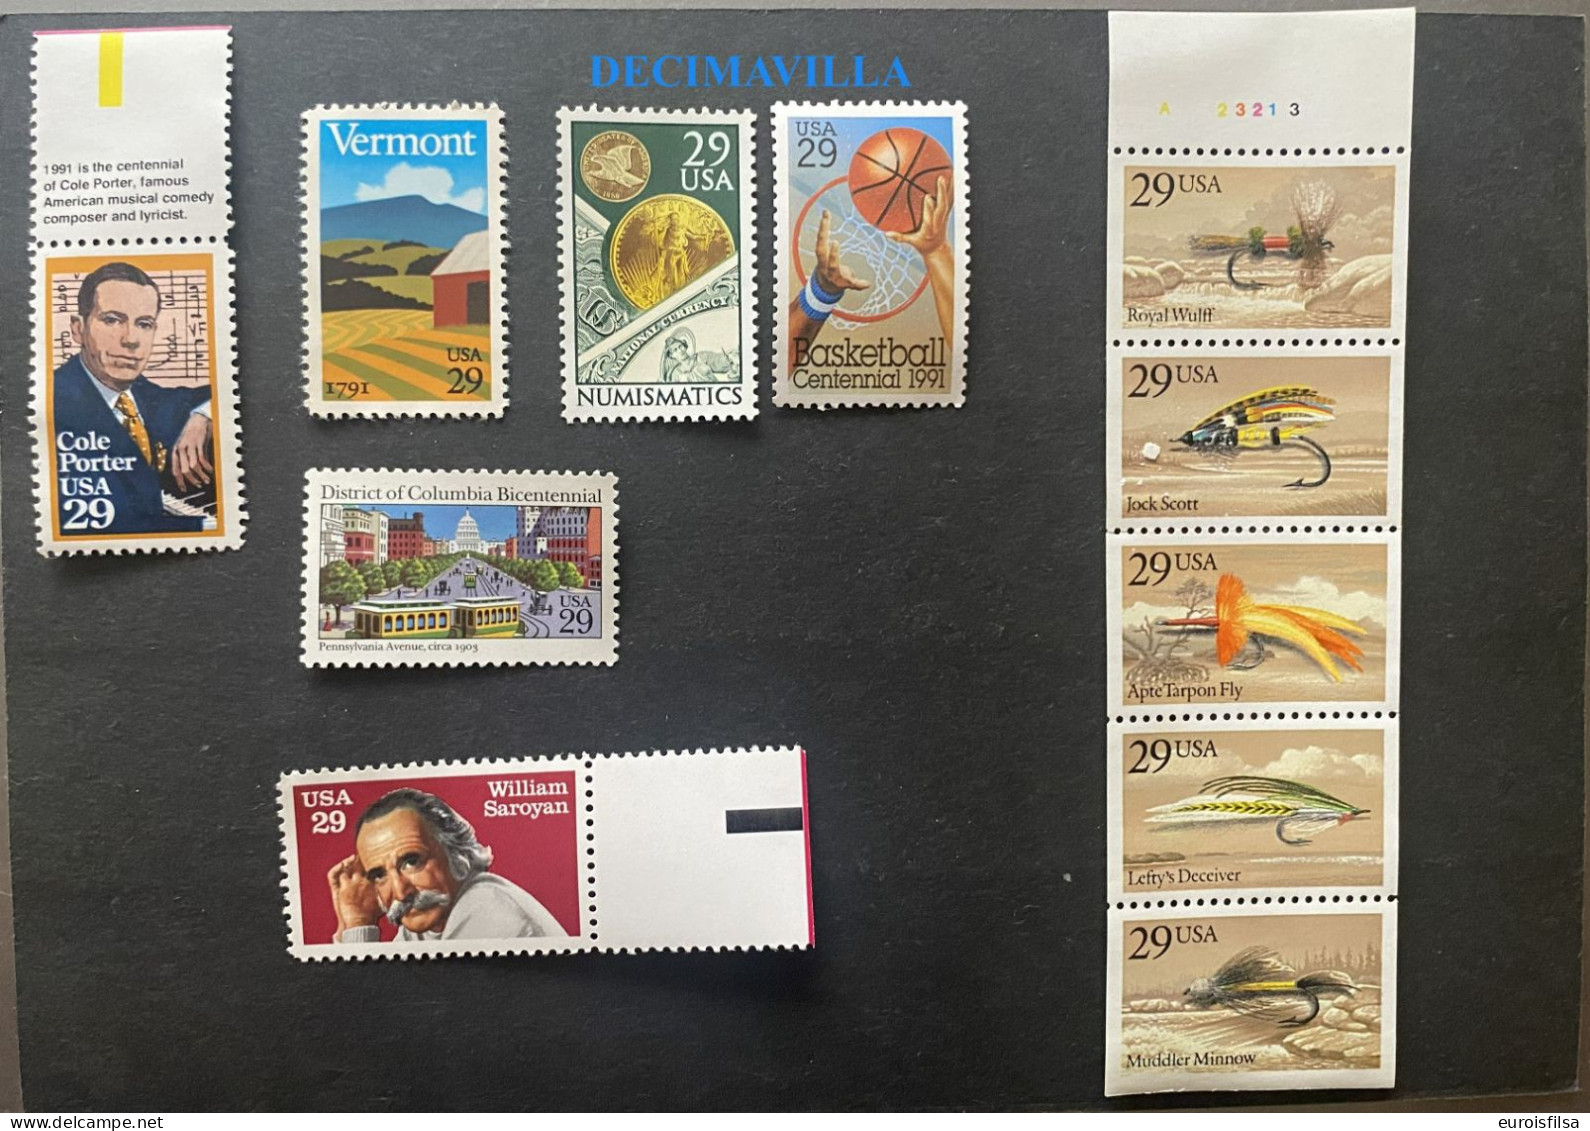 OTEM540, ESTADOS UNIDOS, PESCA, NUMISMATICA, BASKETBALL, PERSONAJES, VERMONT, COLUMBIA - Unused Stamps